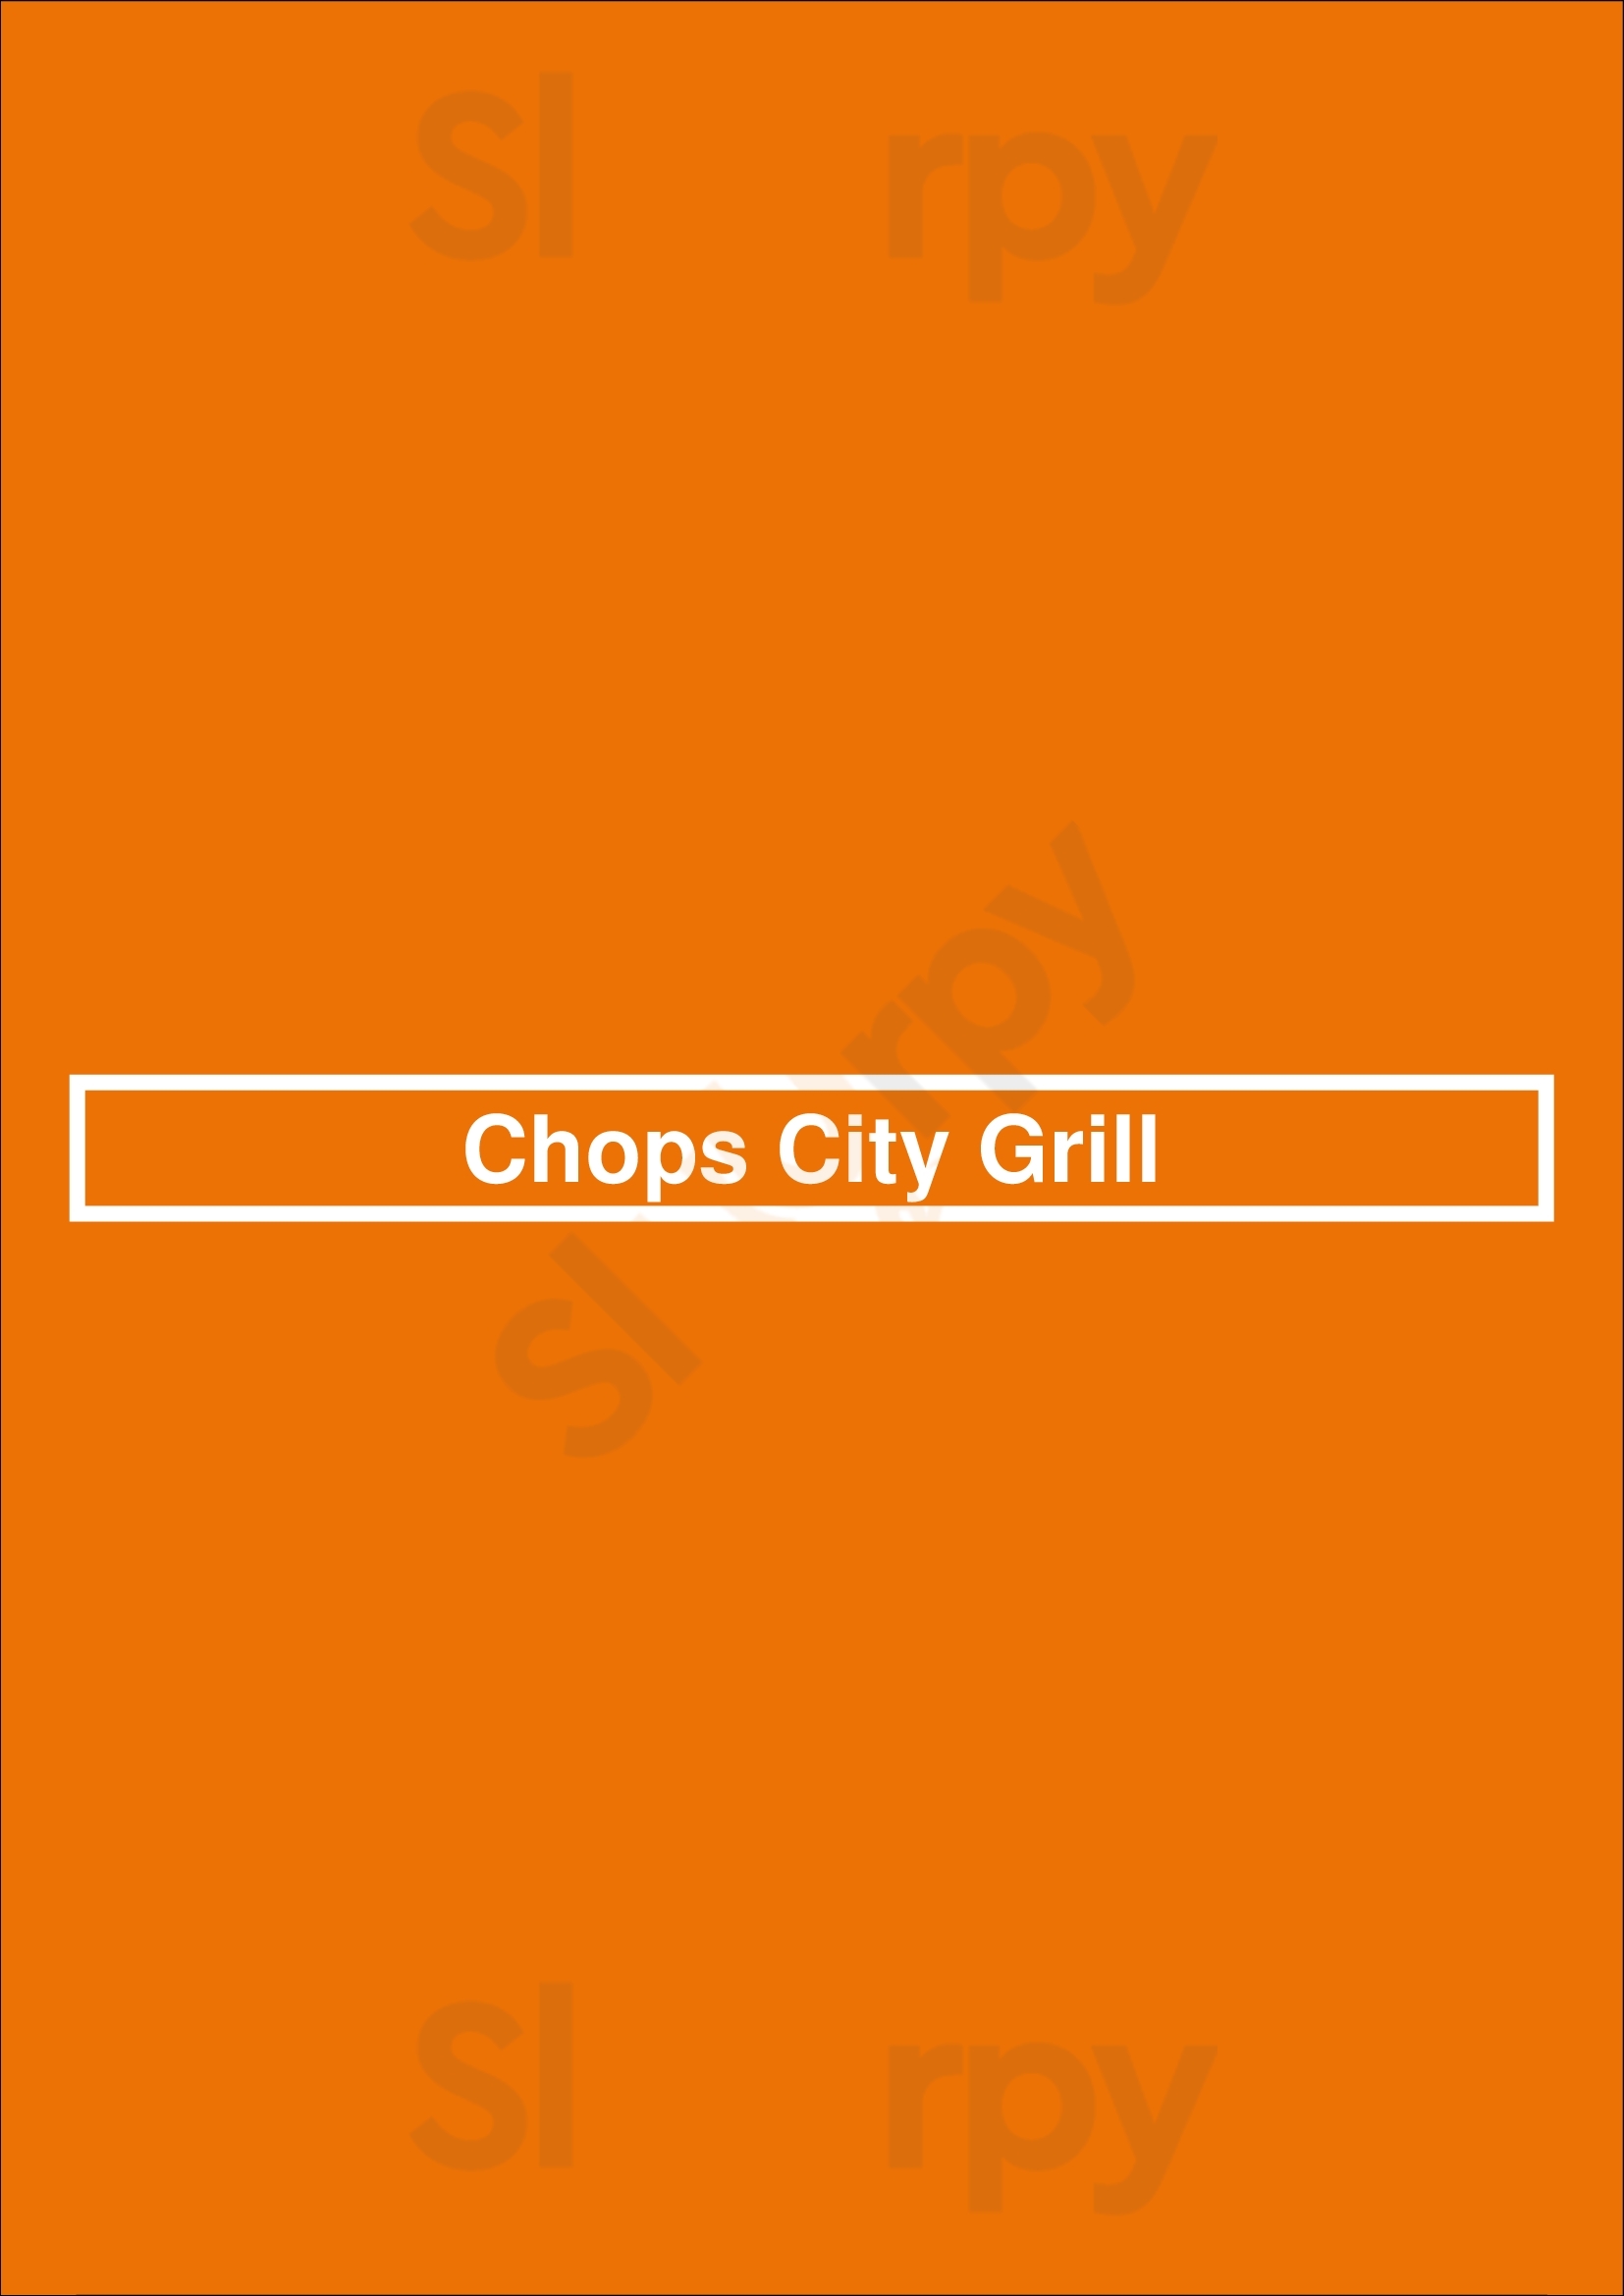 Chops City Grill Naples Menu - 1